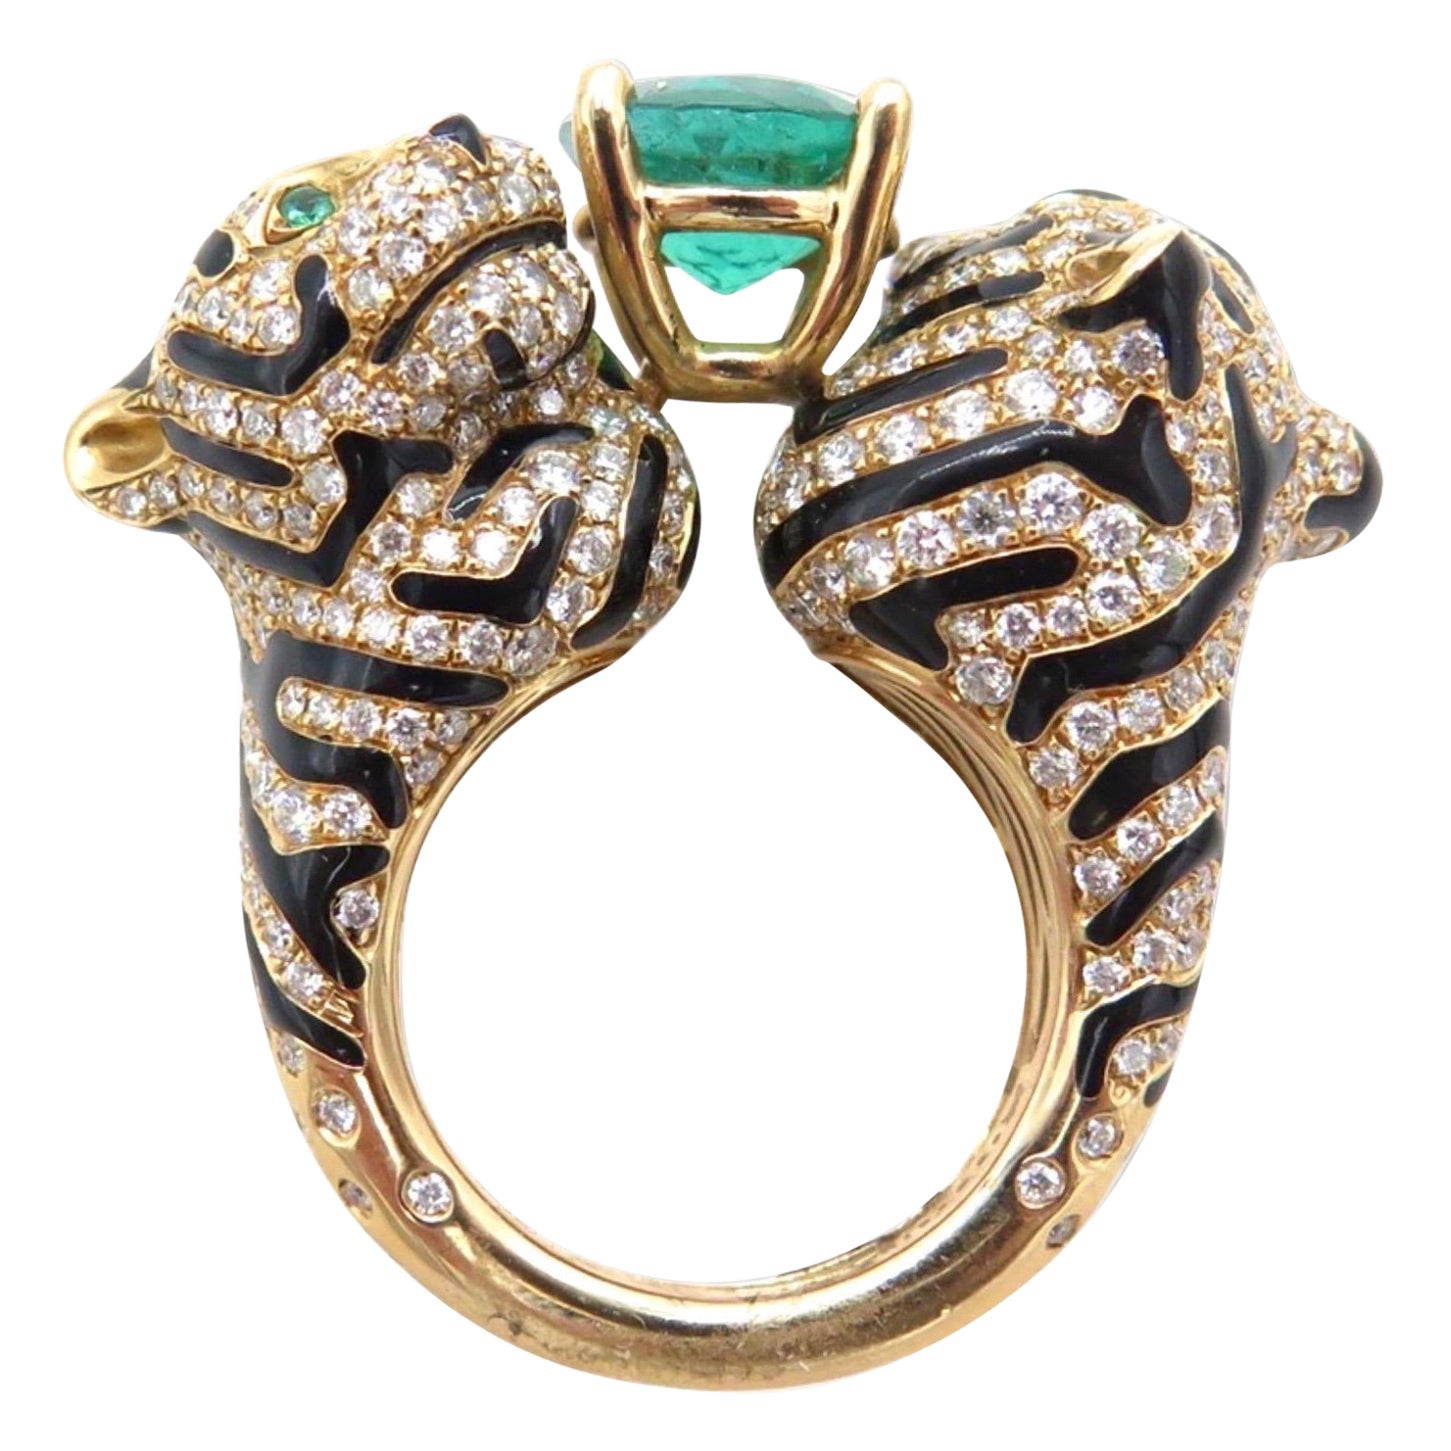 Nina & Co 18kt Diamond & Emerald Ring